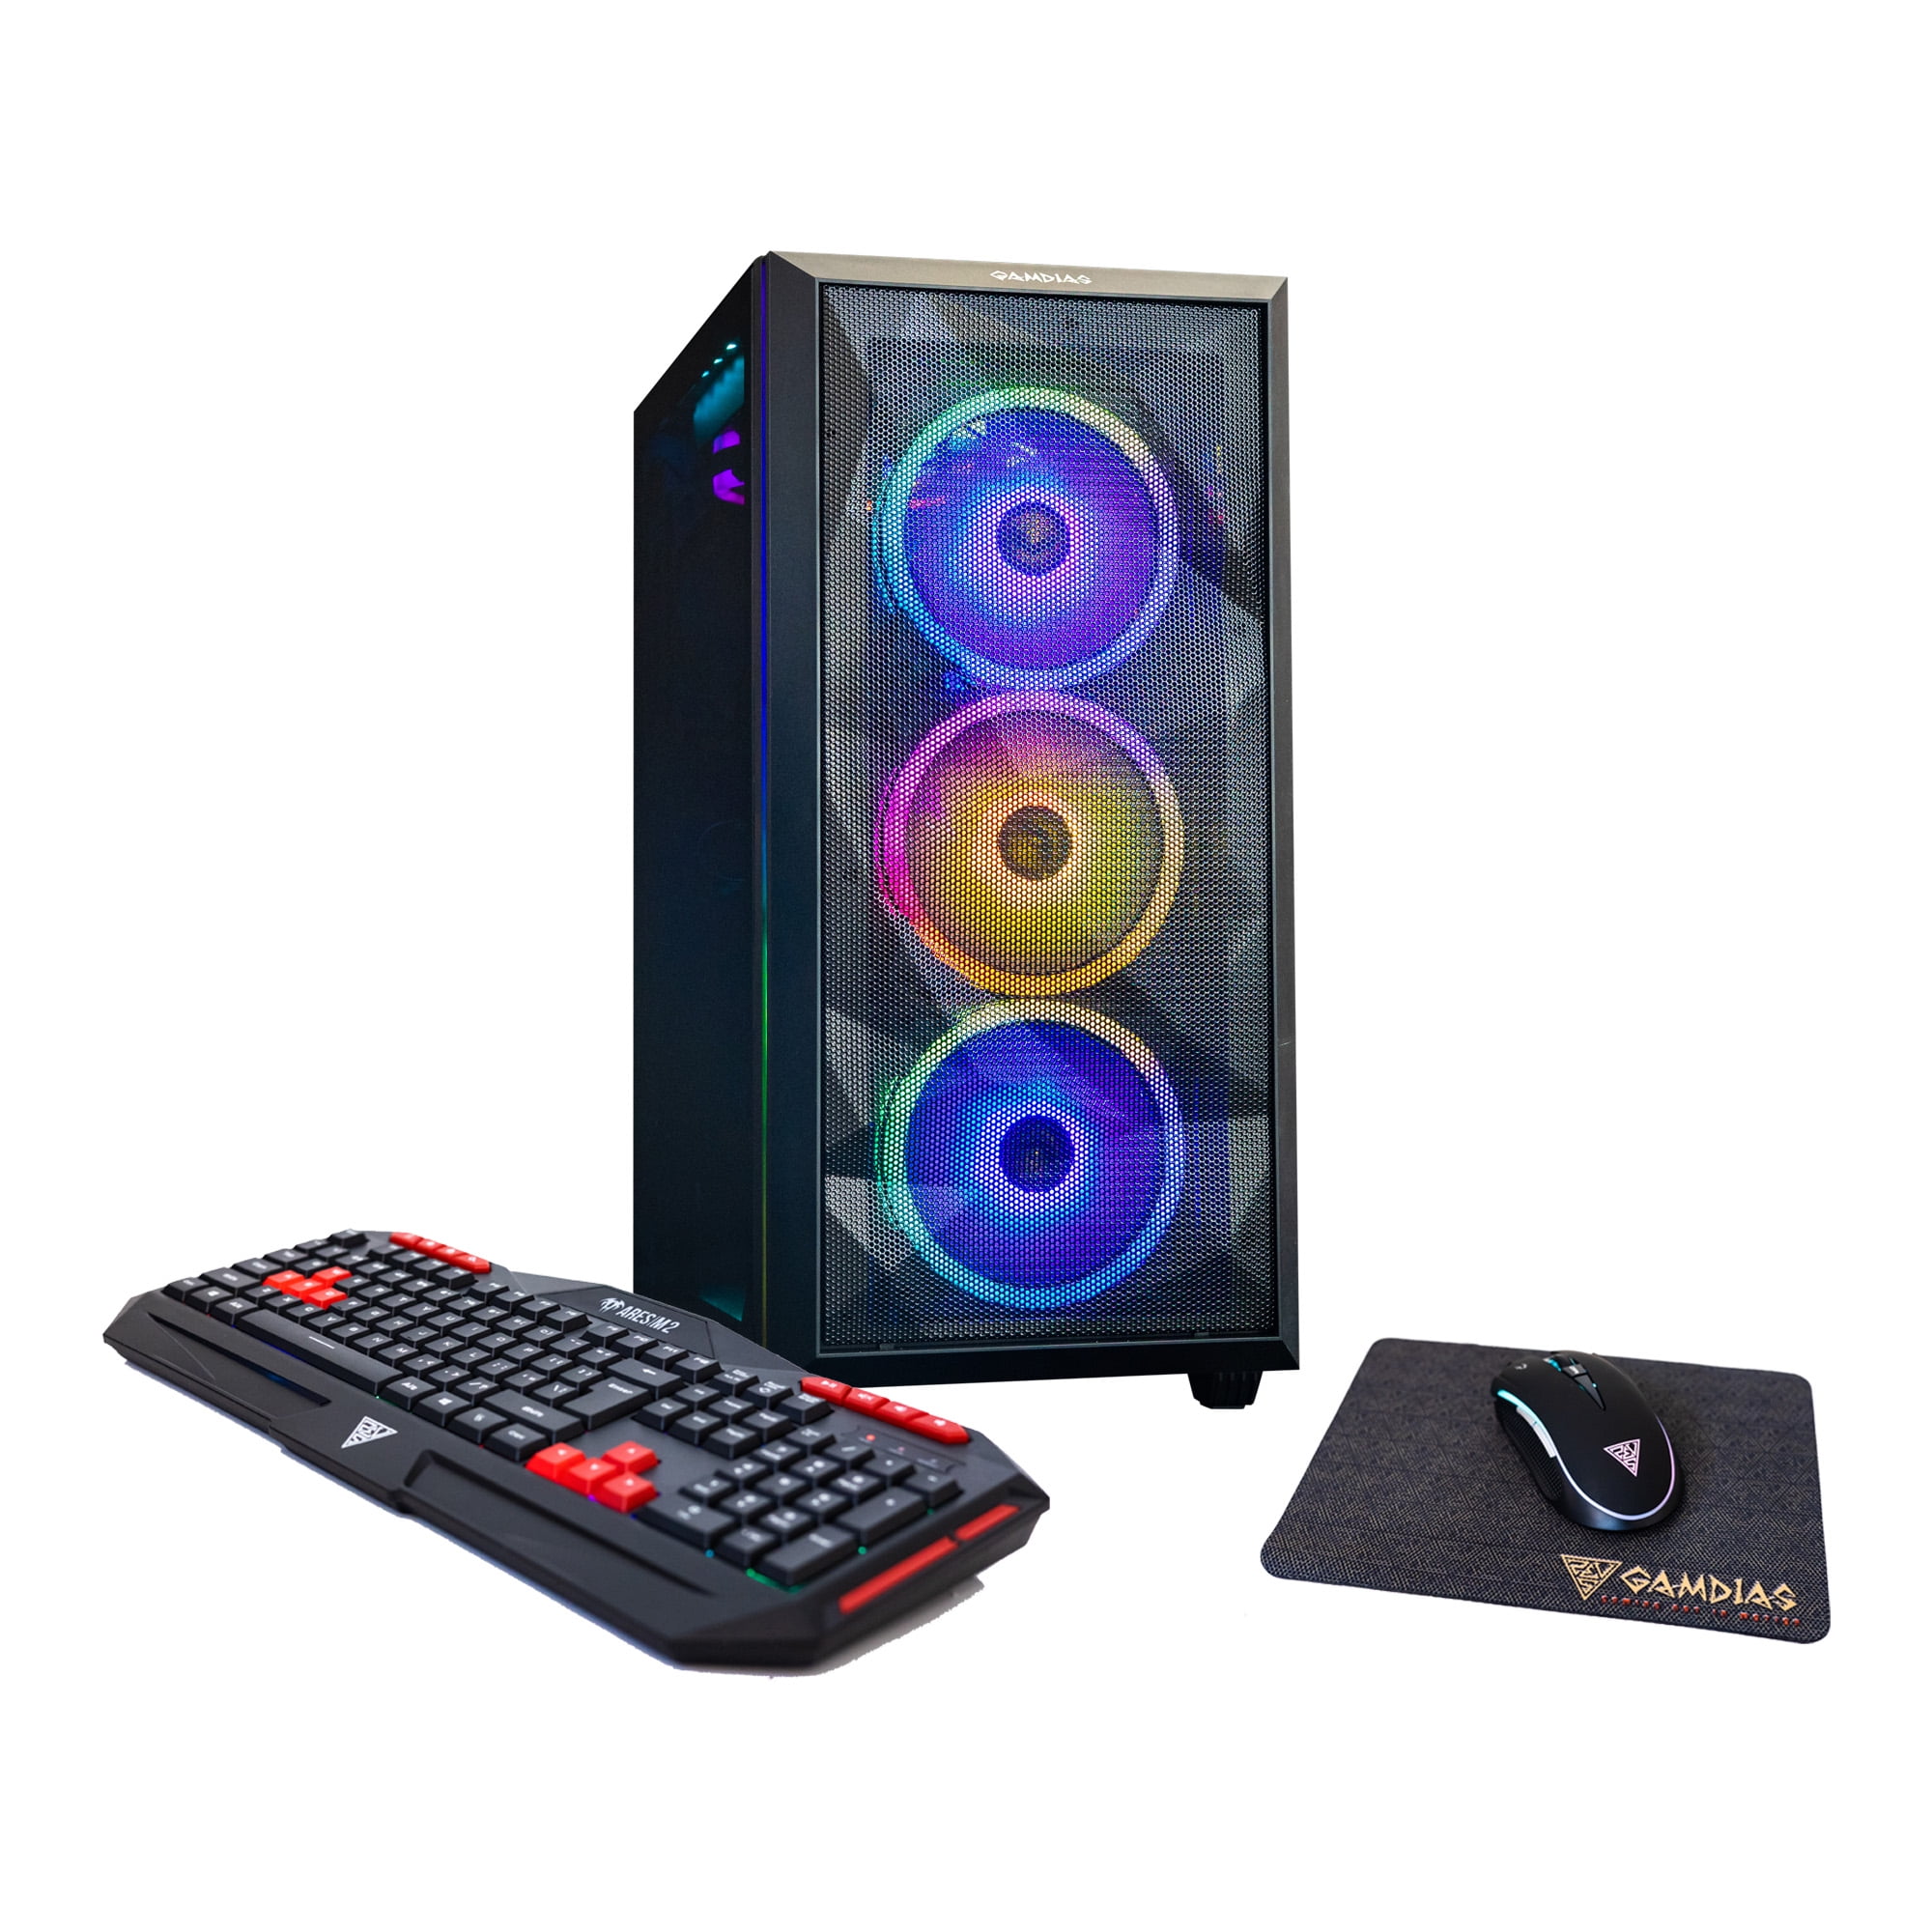 Omega Gaming Desktop PC With 12th Gen Intel Core i7 and GeForce RTX 3080 GPU - Walmart.com